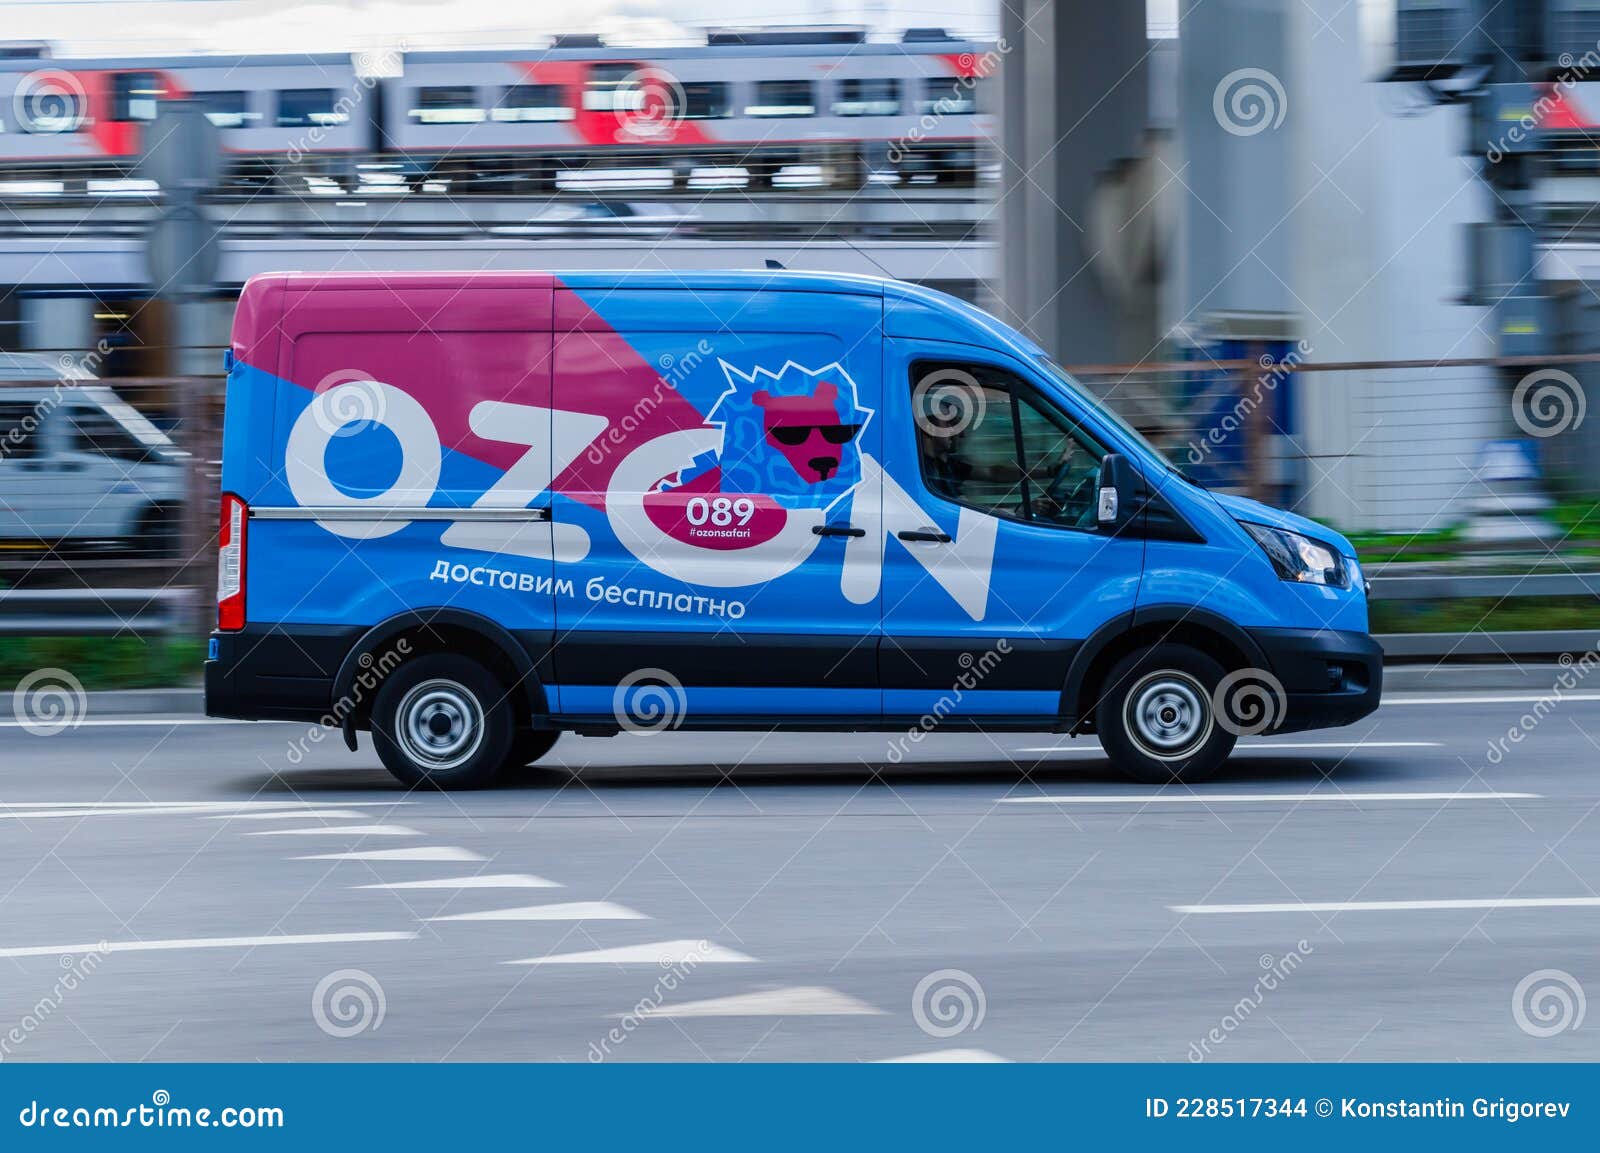 Delivery Van of the Russian Online 